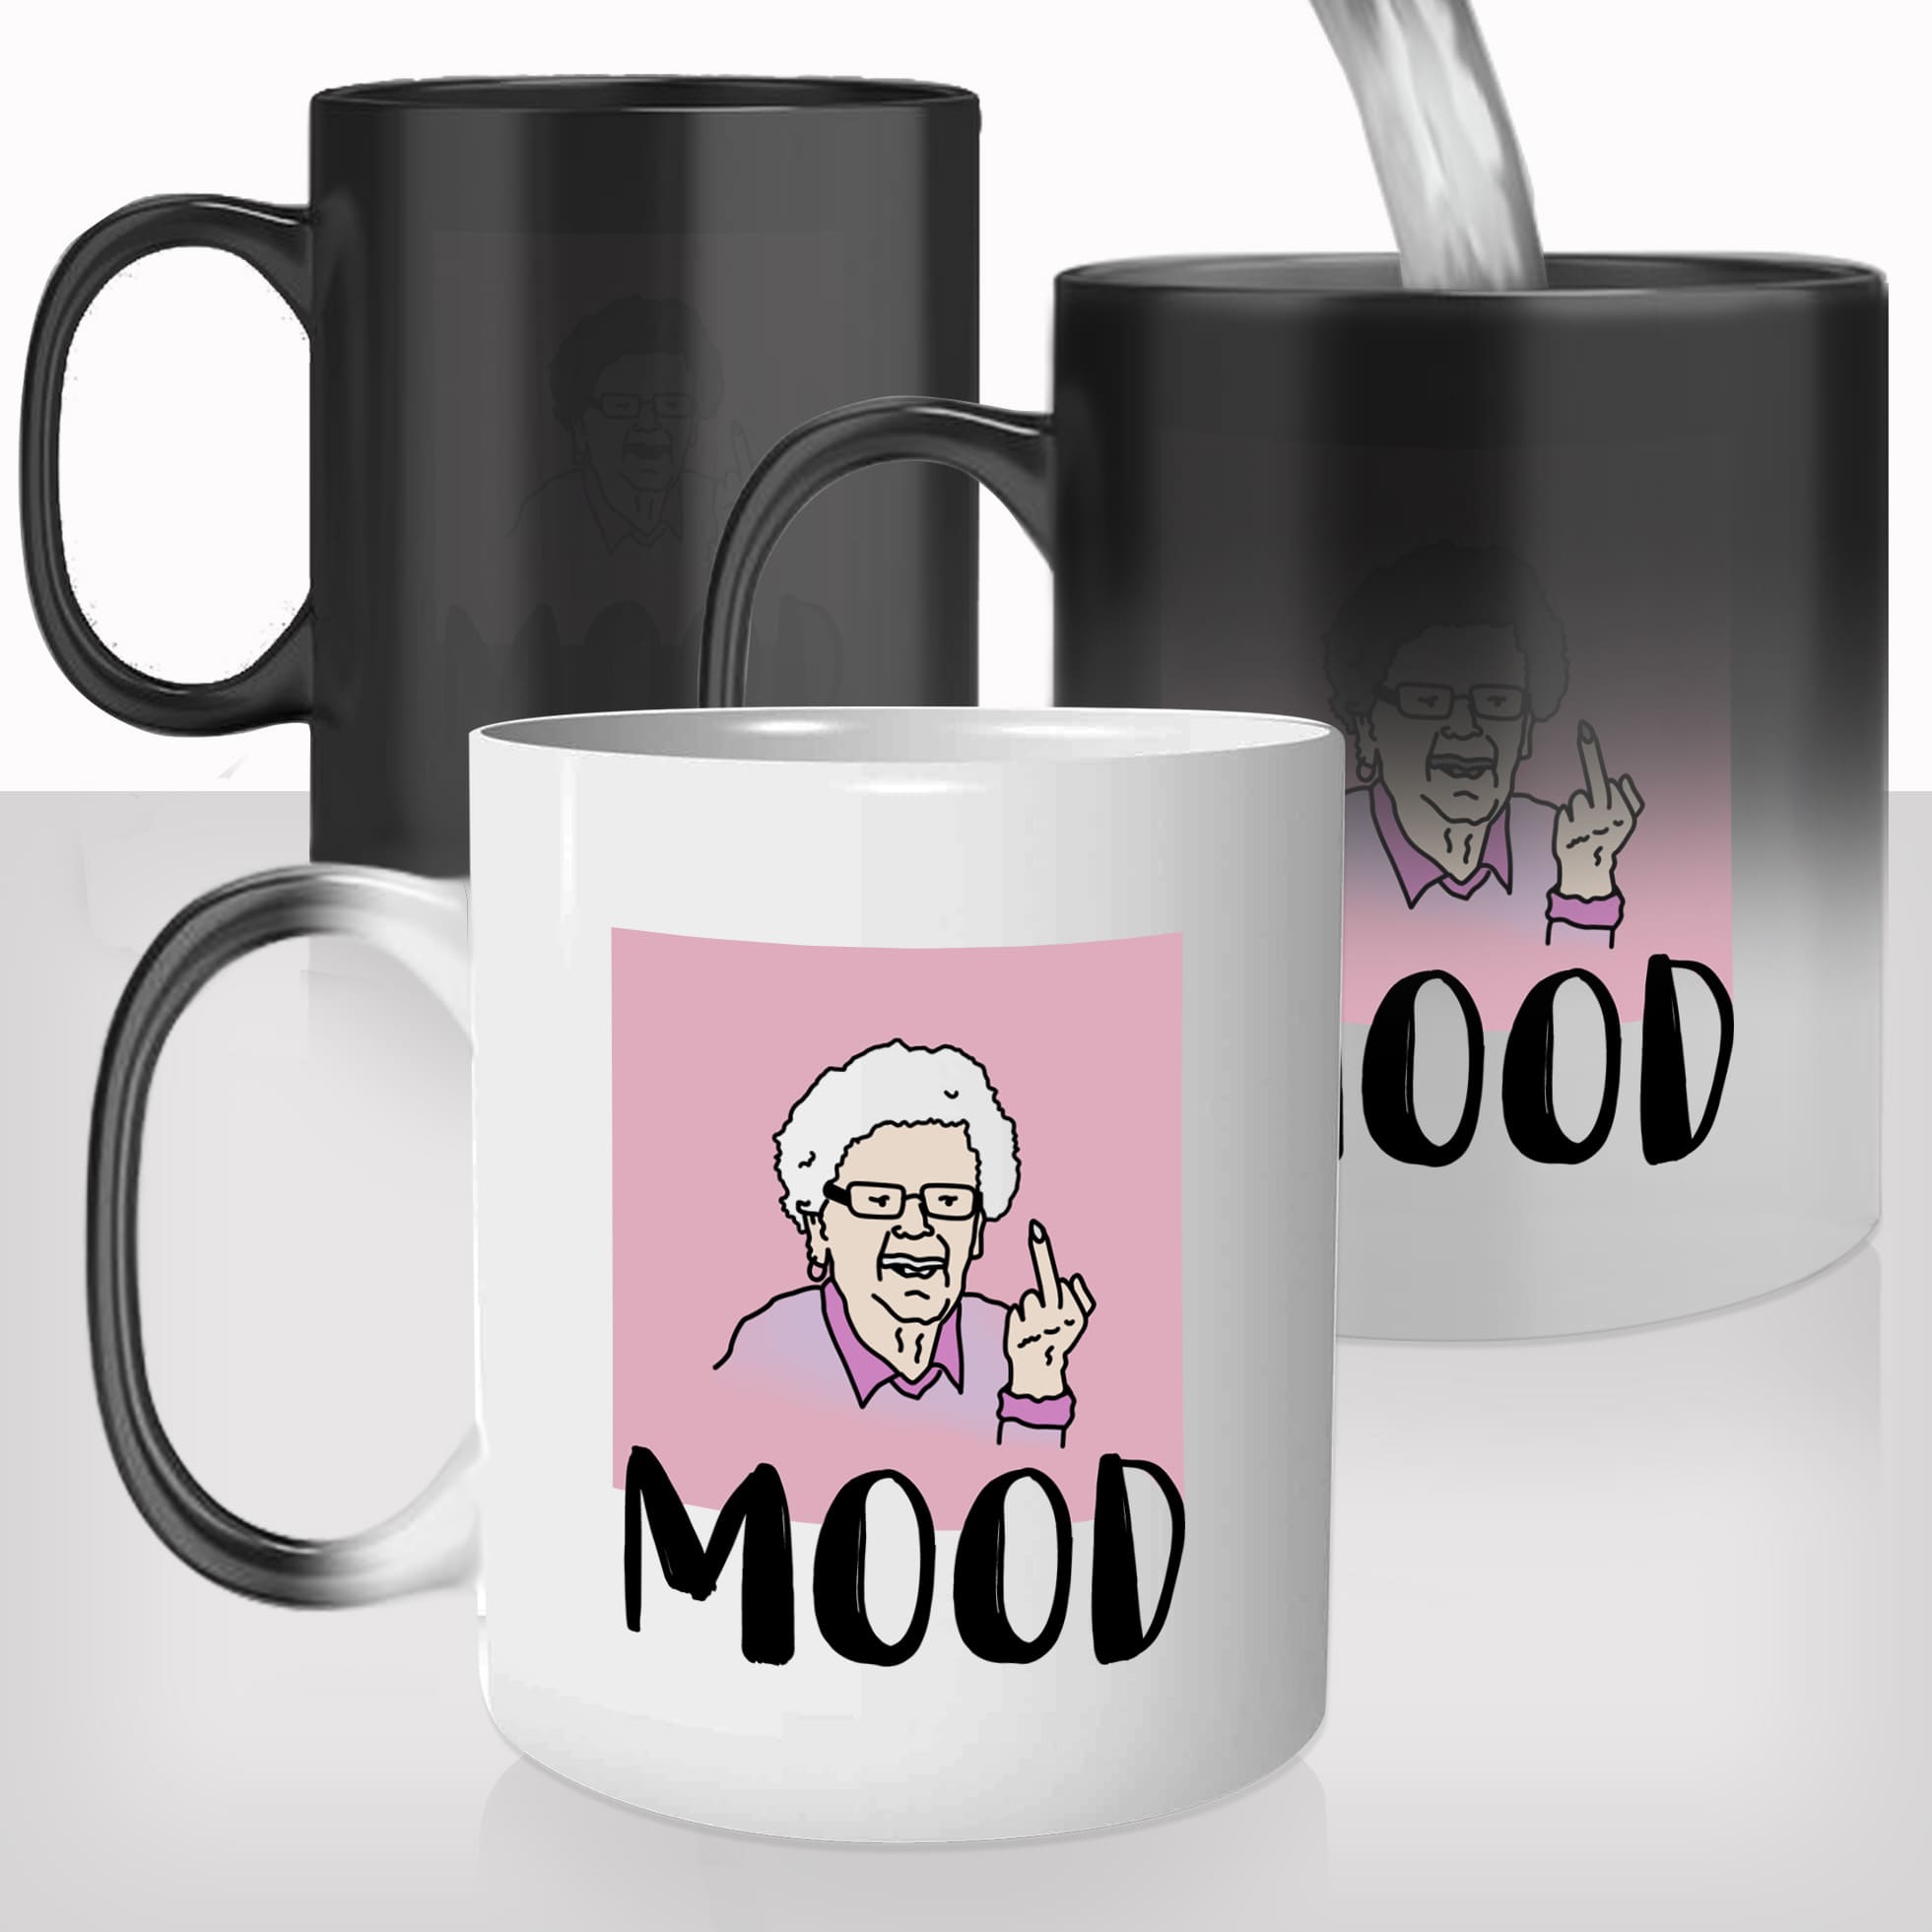 mug-magique-tasse-magic-thermo-reactif-mood-humeur-fuck-mamie-mémé-grand-mere-humour-offrir-cadeau-original-fun-café-thé-chocolat